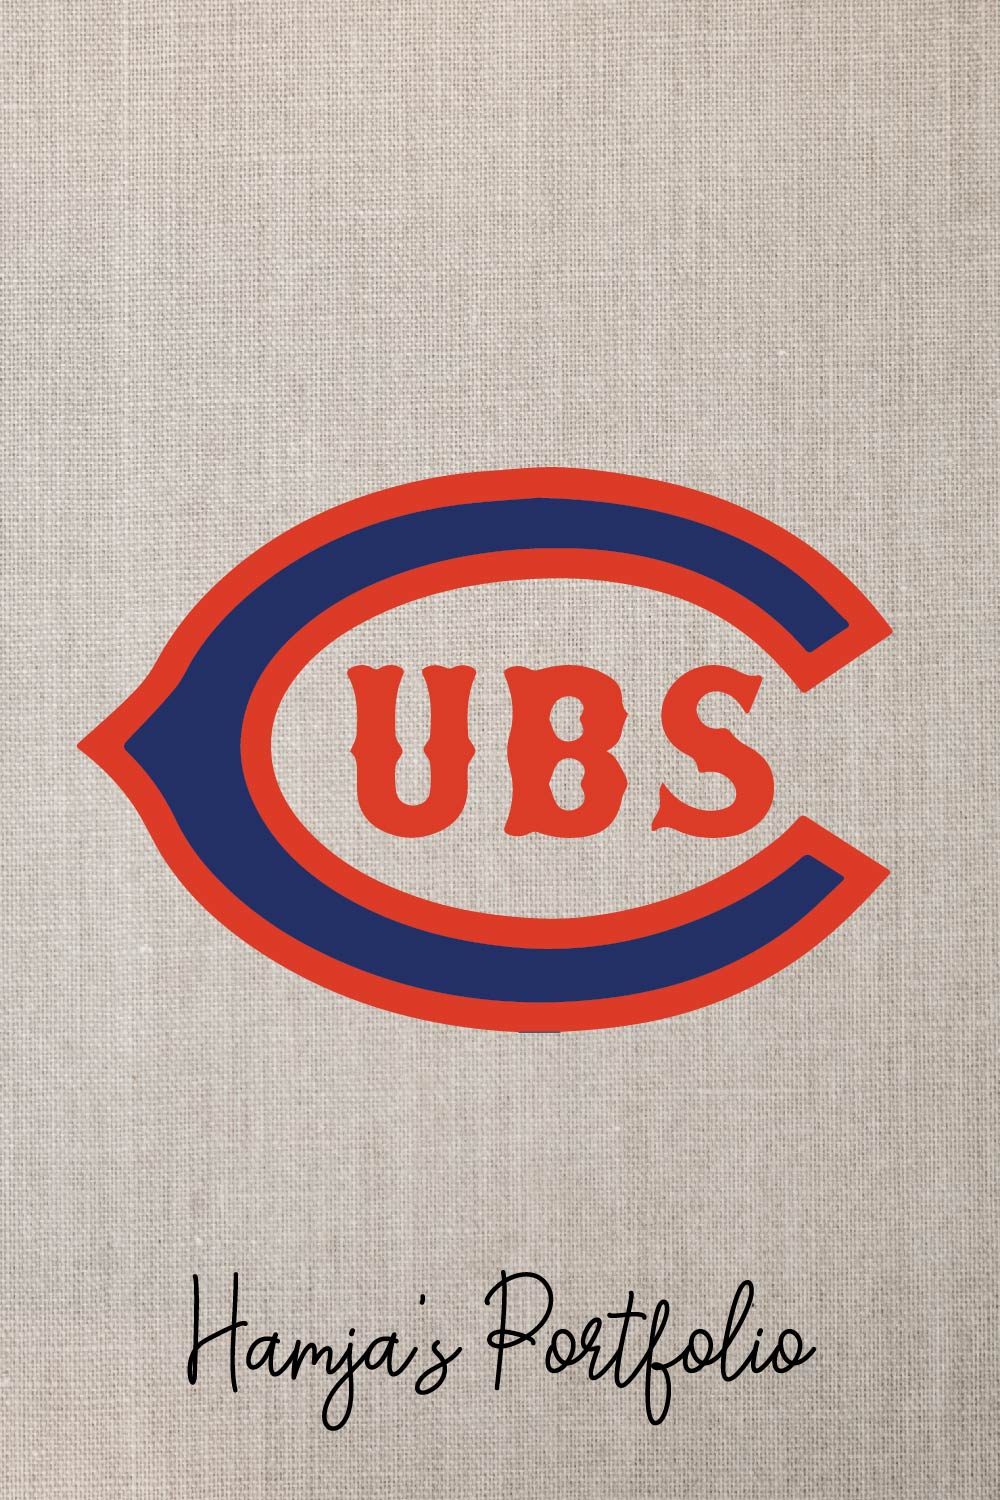 Chicago Cubs Logo Vector Set pinterest preview image.